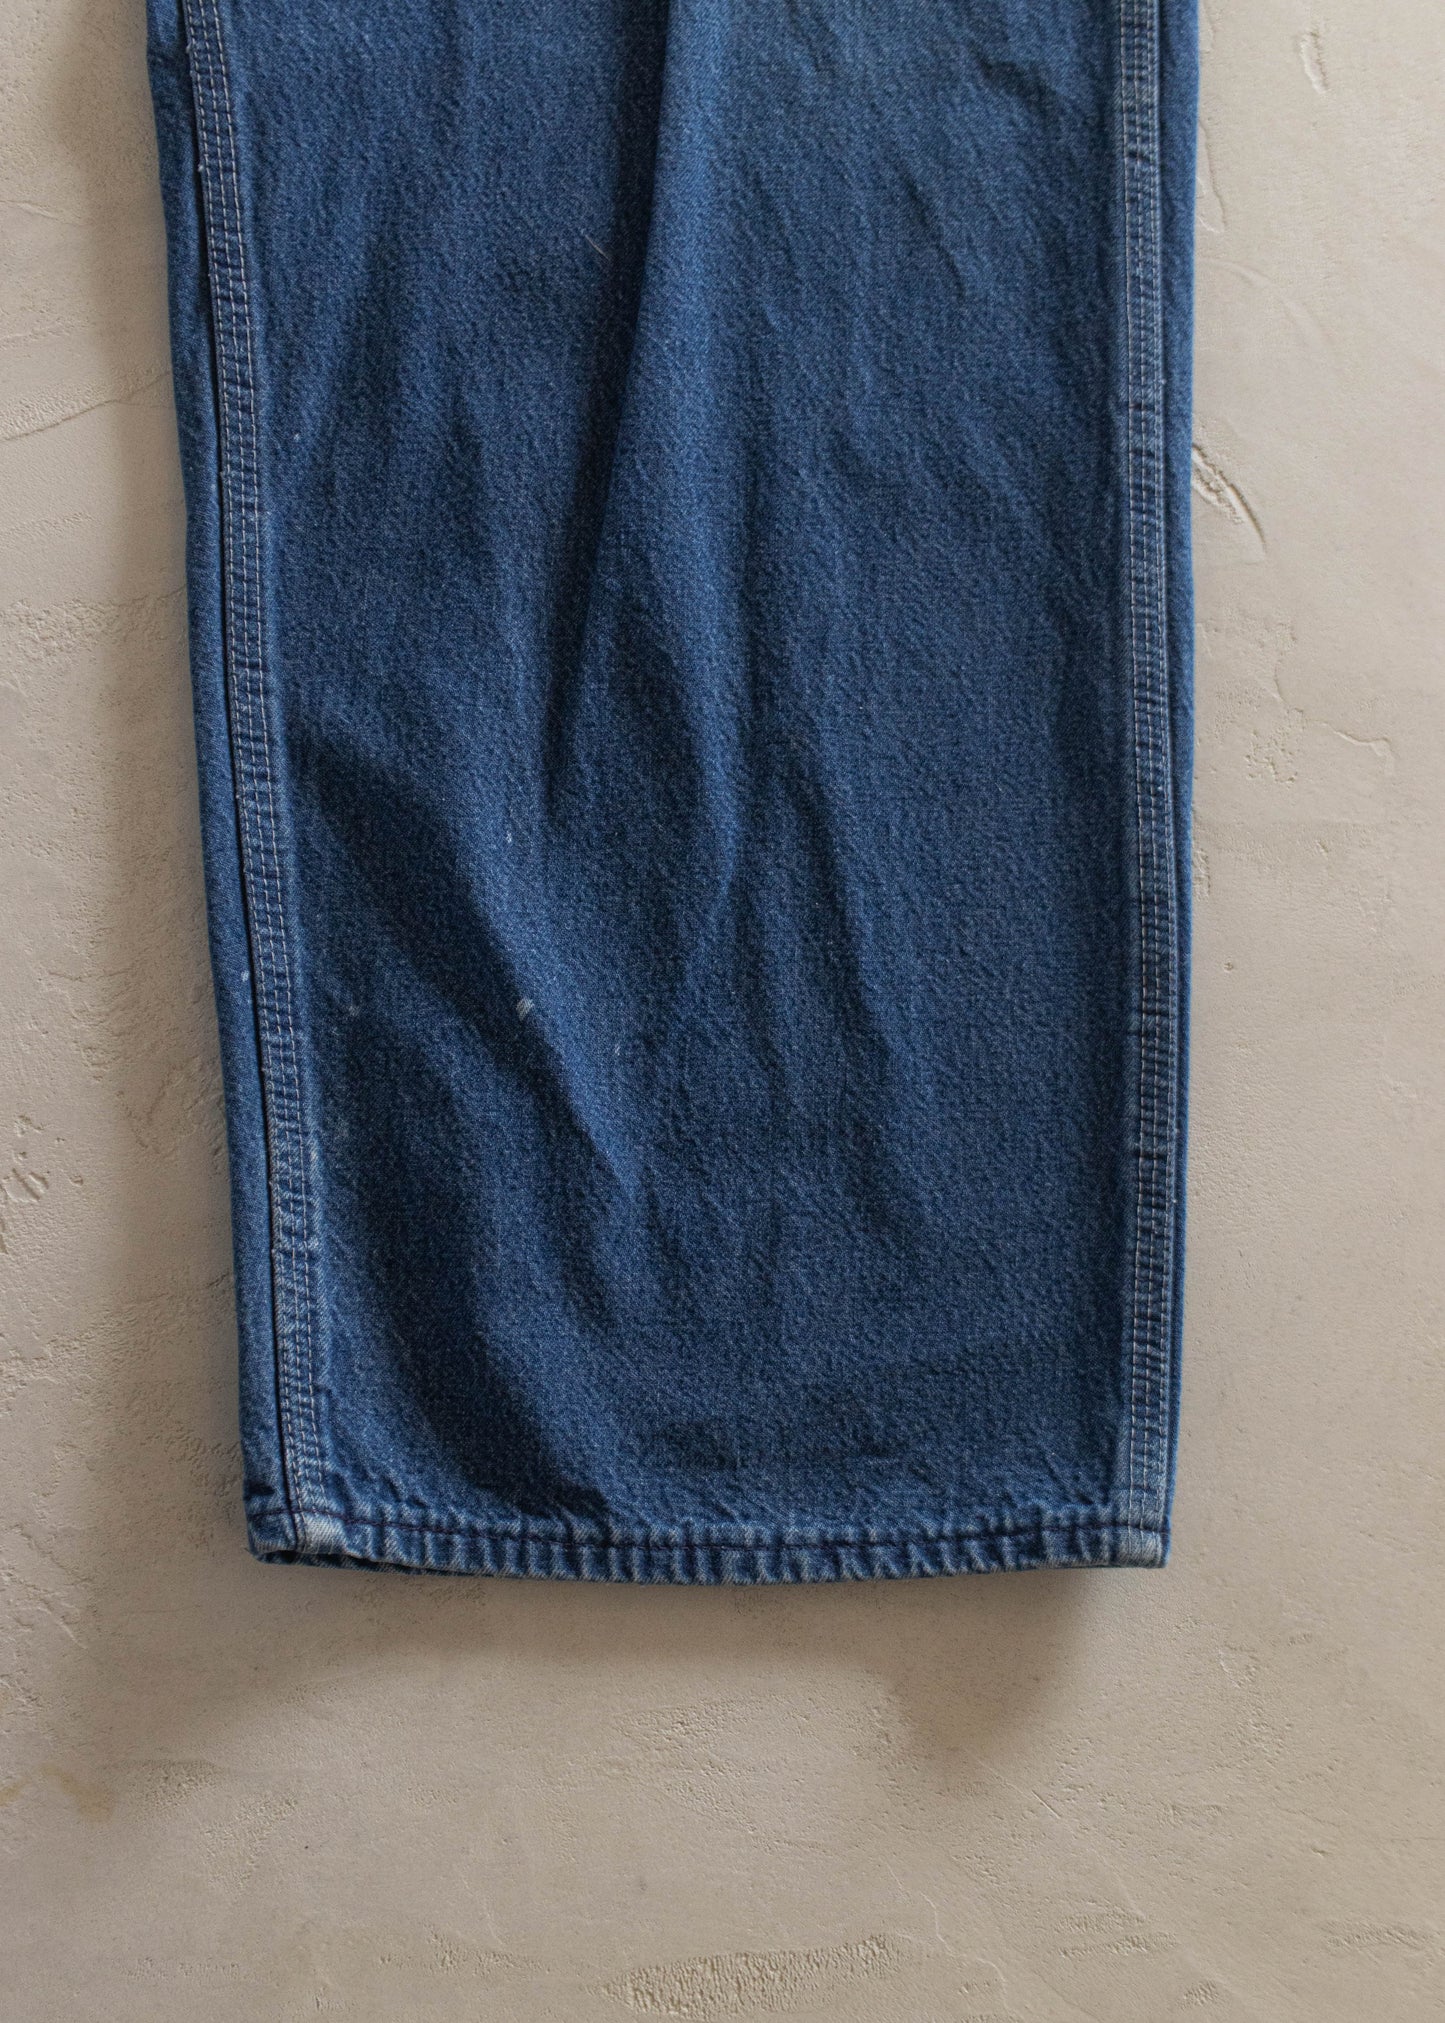 1970s Union Made OshKosh Denim Carpenter Pants Size Women's 42 Men's 44